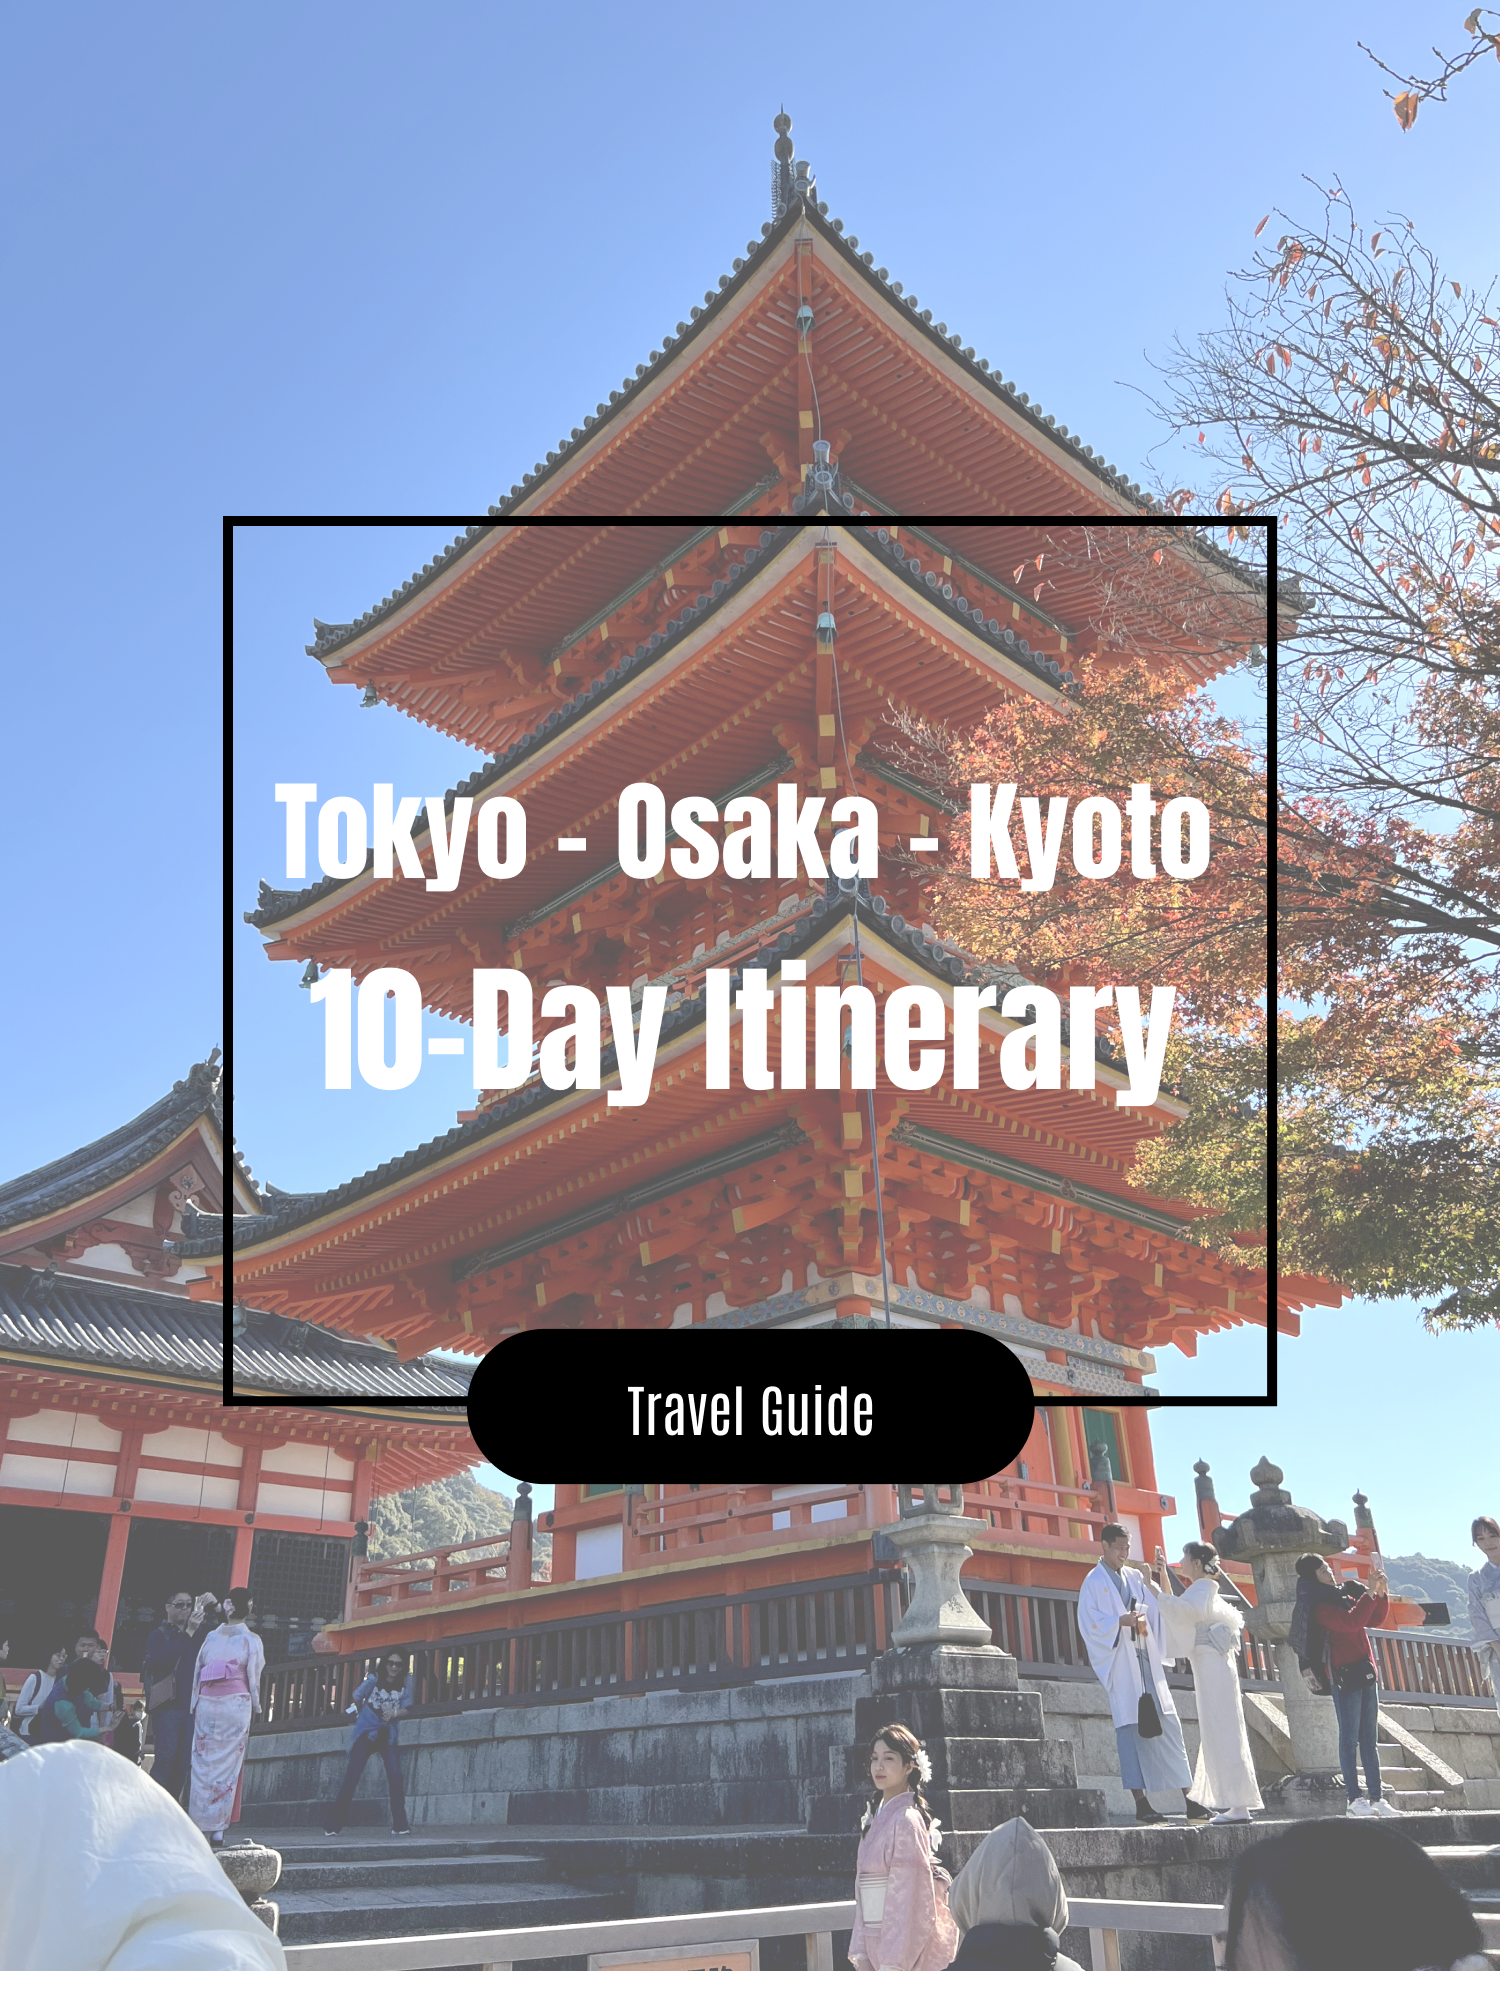 Tokyo-Kyoto-Osaka 10-Day Itinerary